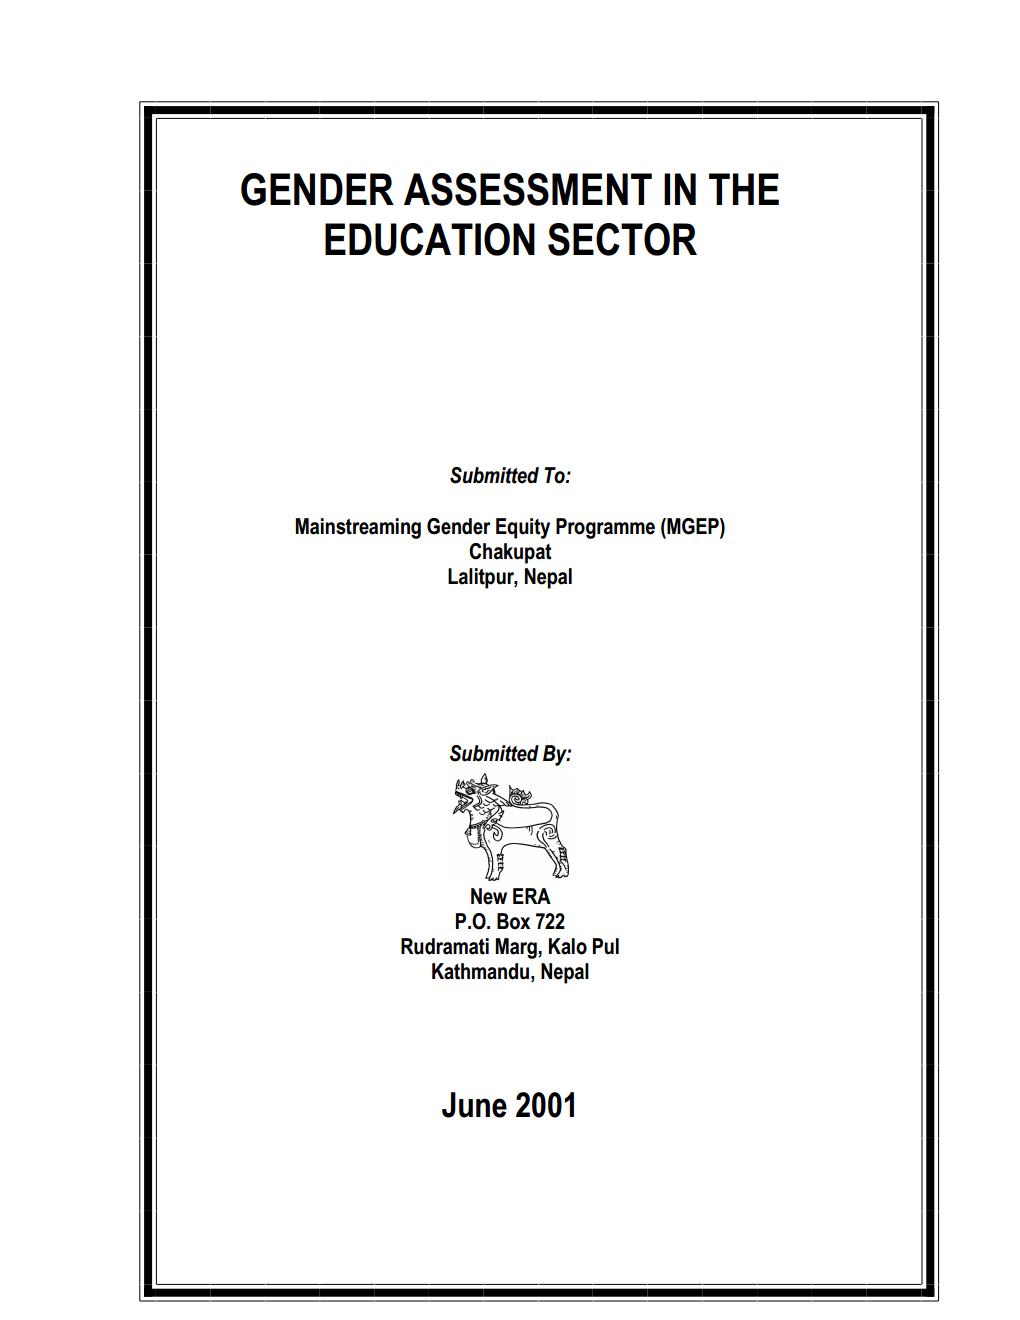 Gender Assessment in the Education Sector, Mainstreaming Gender Equity Program